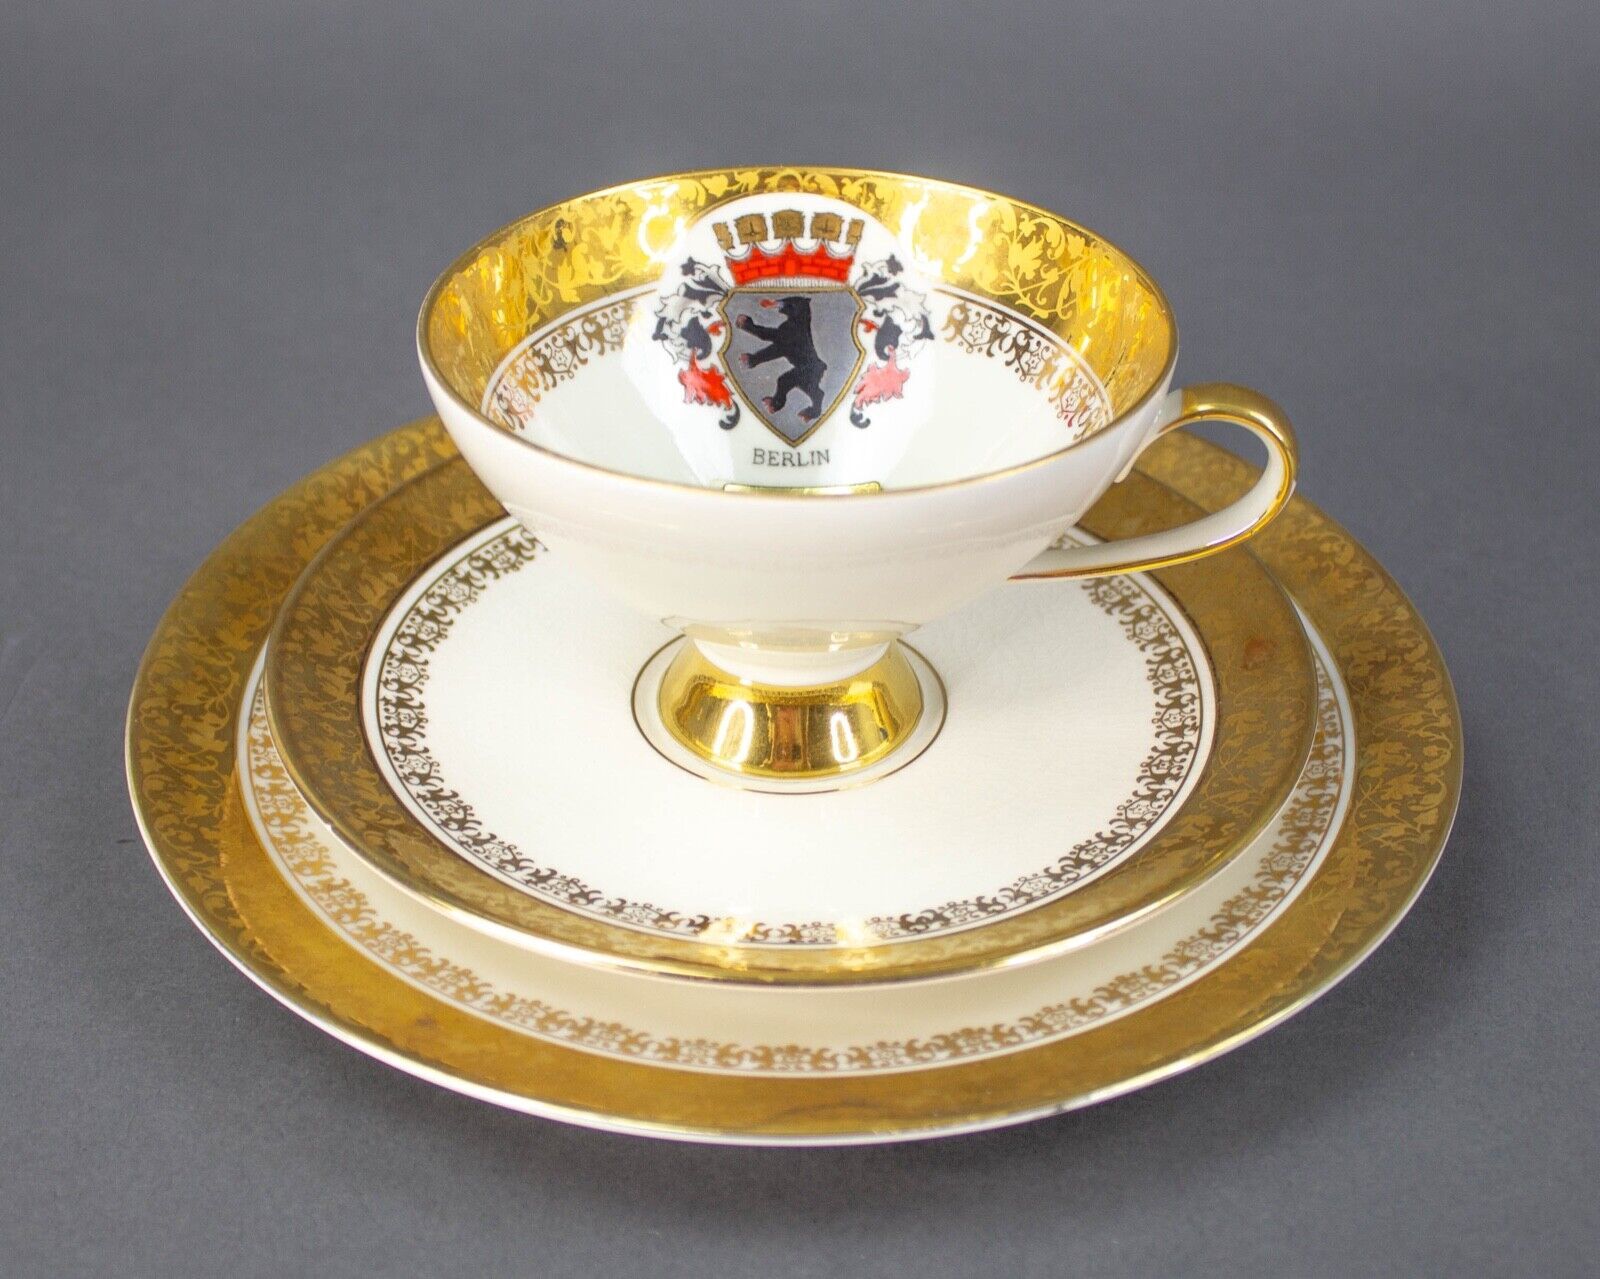 Primary image for Kunst Kronach Handgemalt Berlin Crest Gold Tea Cup Saucer Luncheon Plate Set